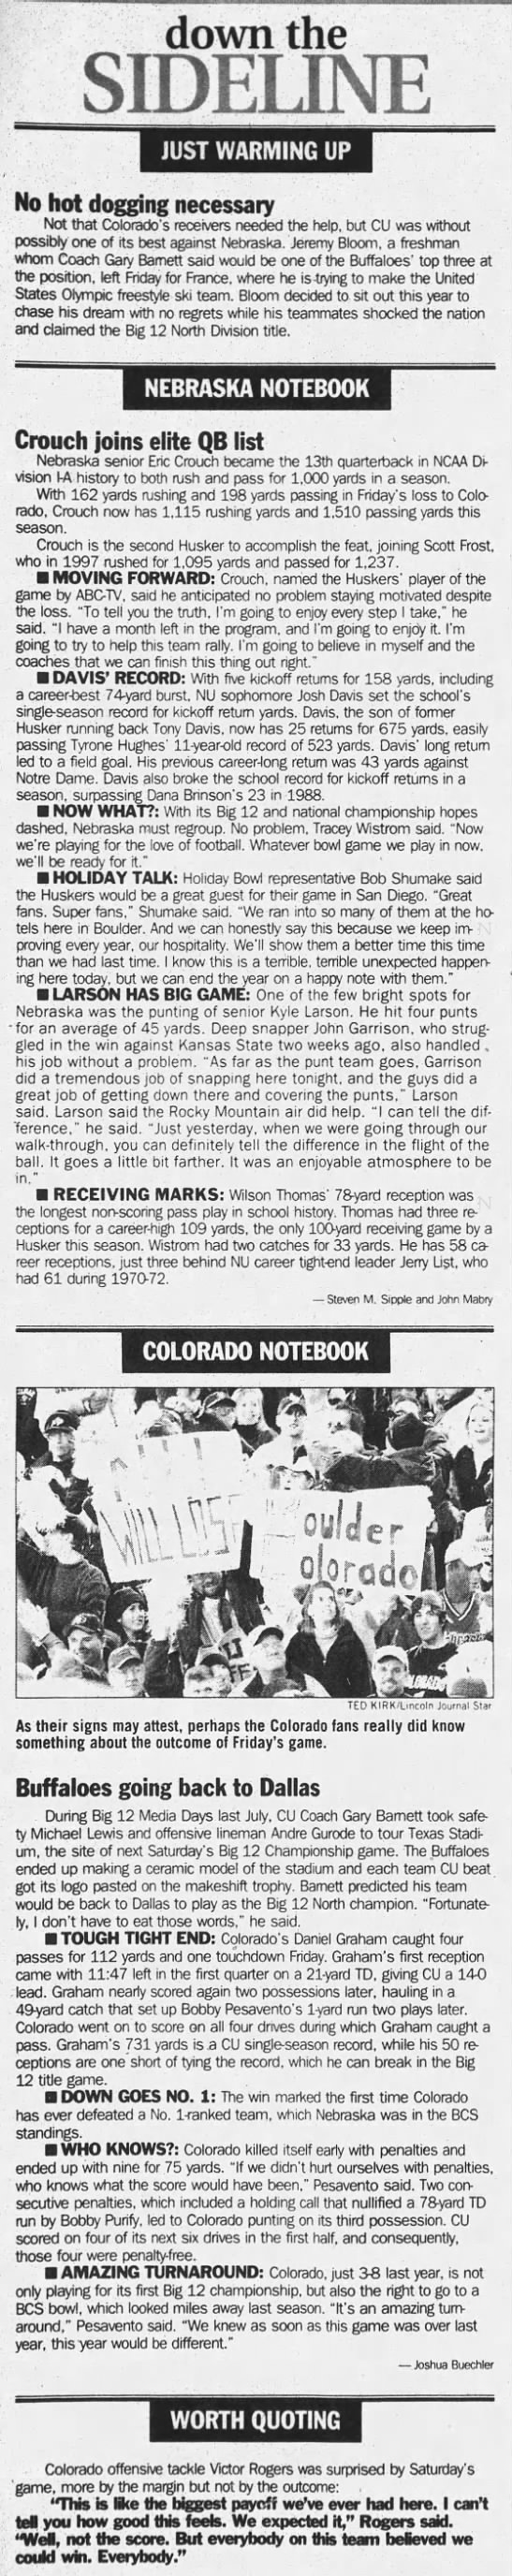 2001 Nebraska-Colorado LJS notes - 